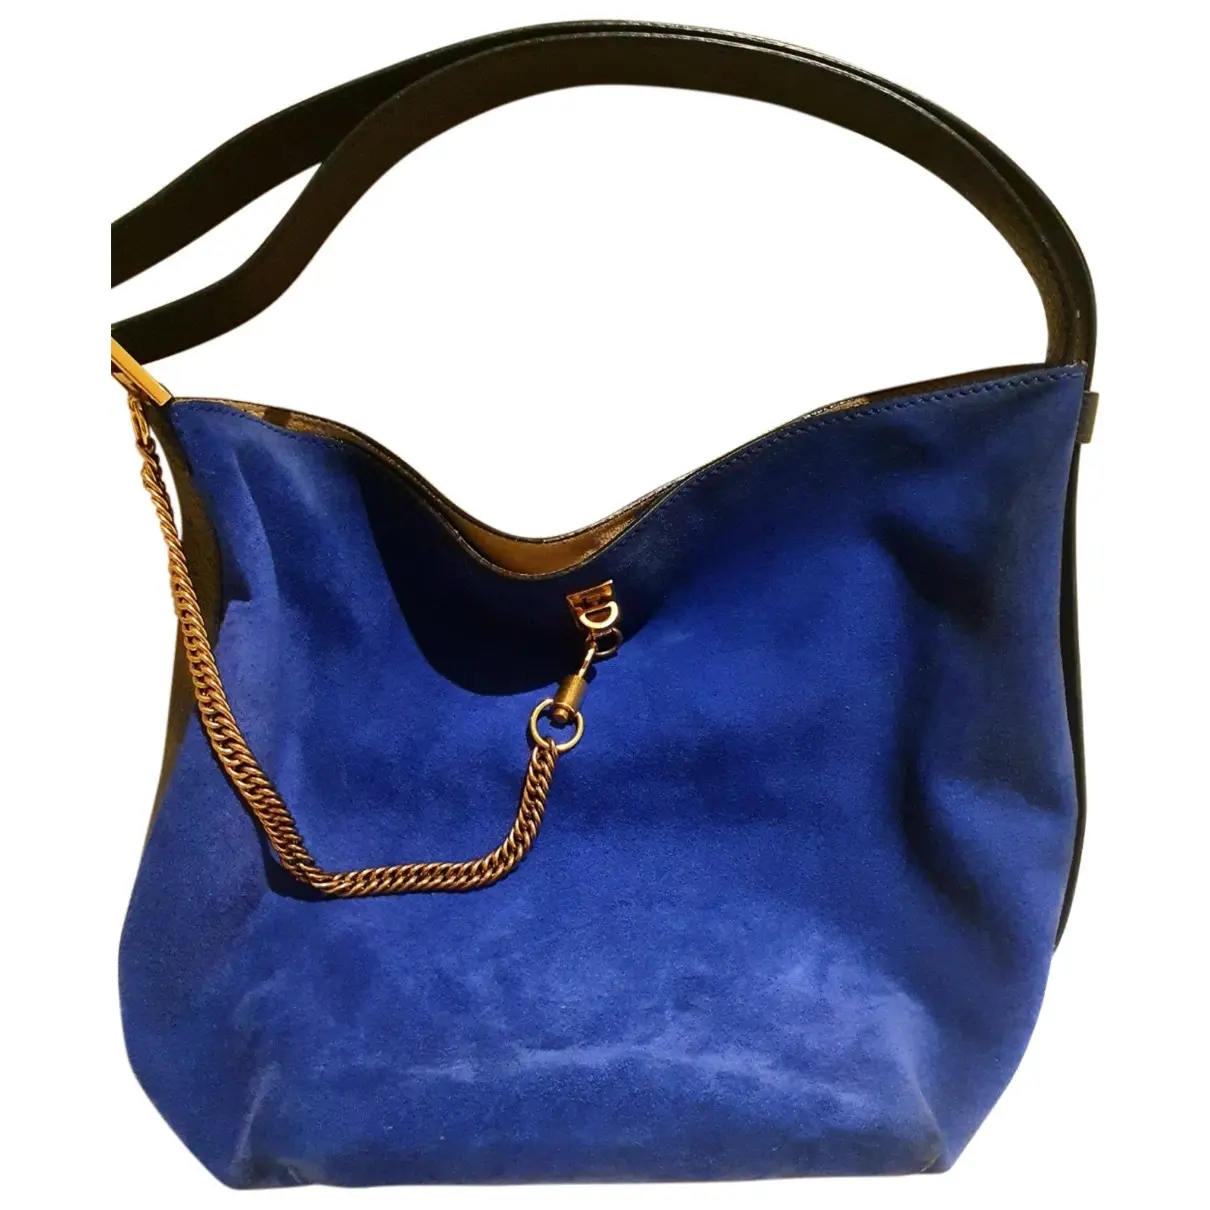 Seau GV Bucket leather handbag Givenchy